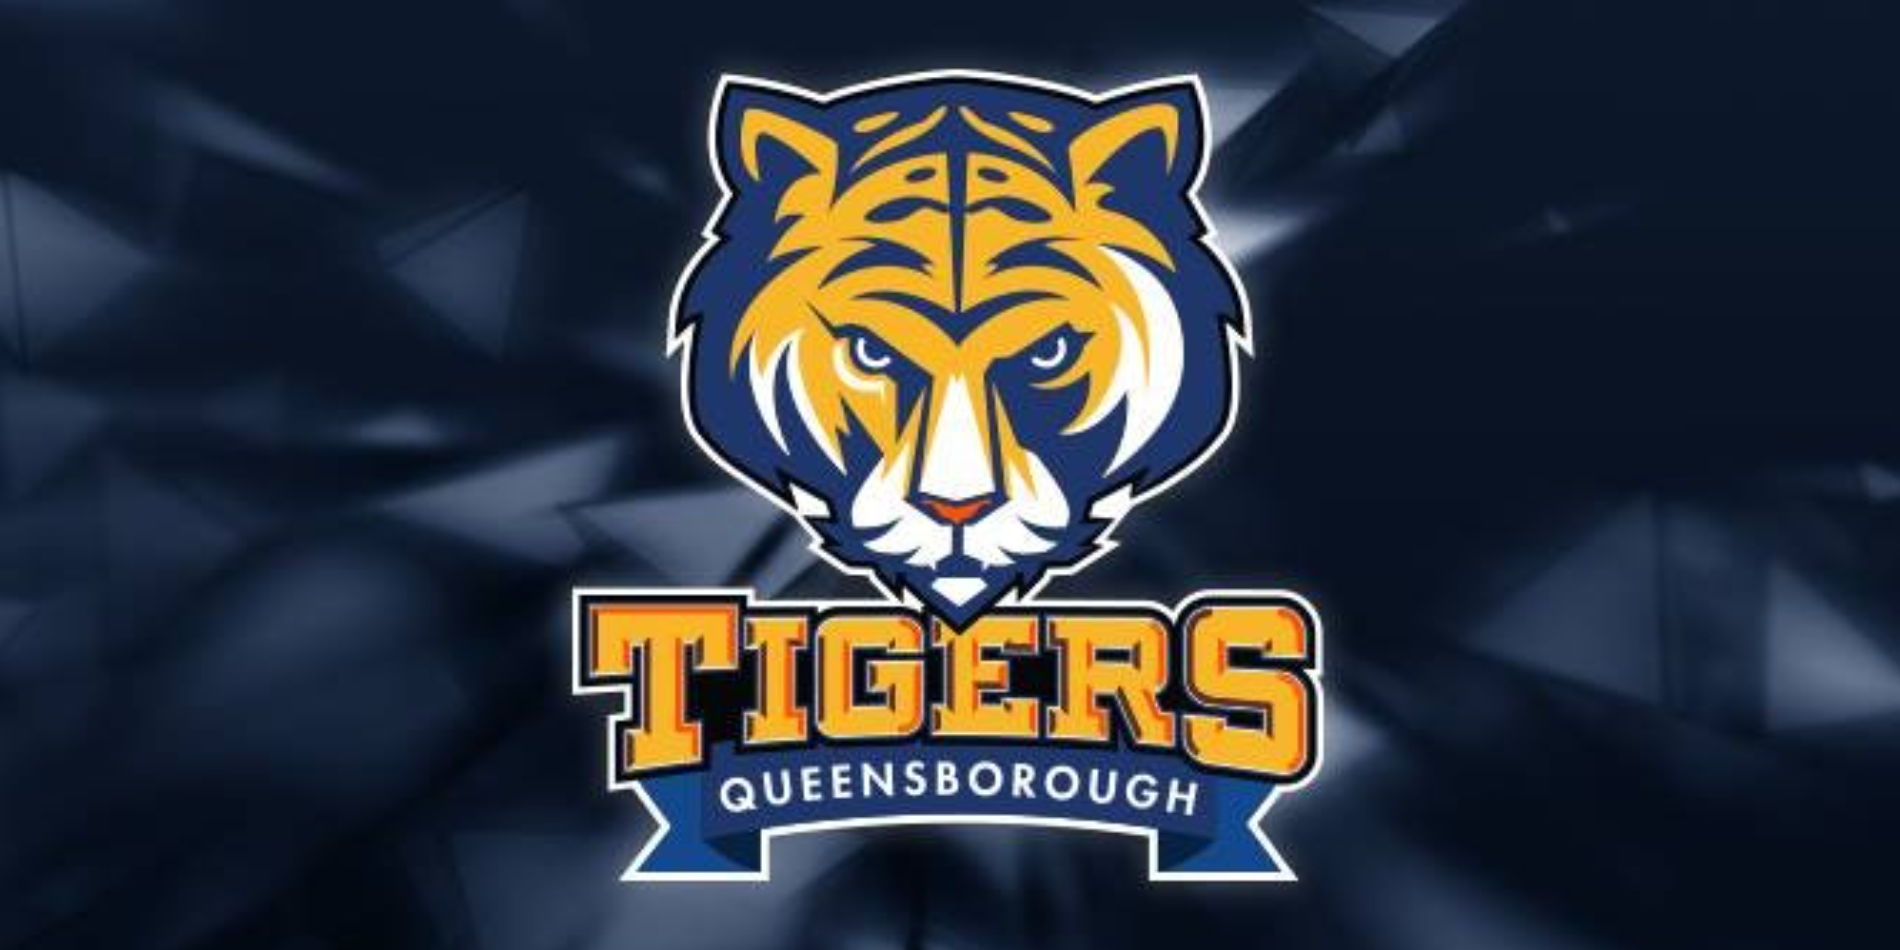 Queensborough Tigers 5K Run/Walk promotional image